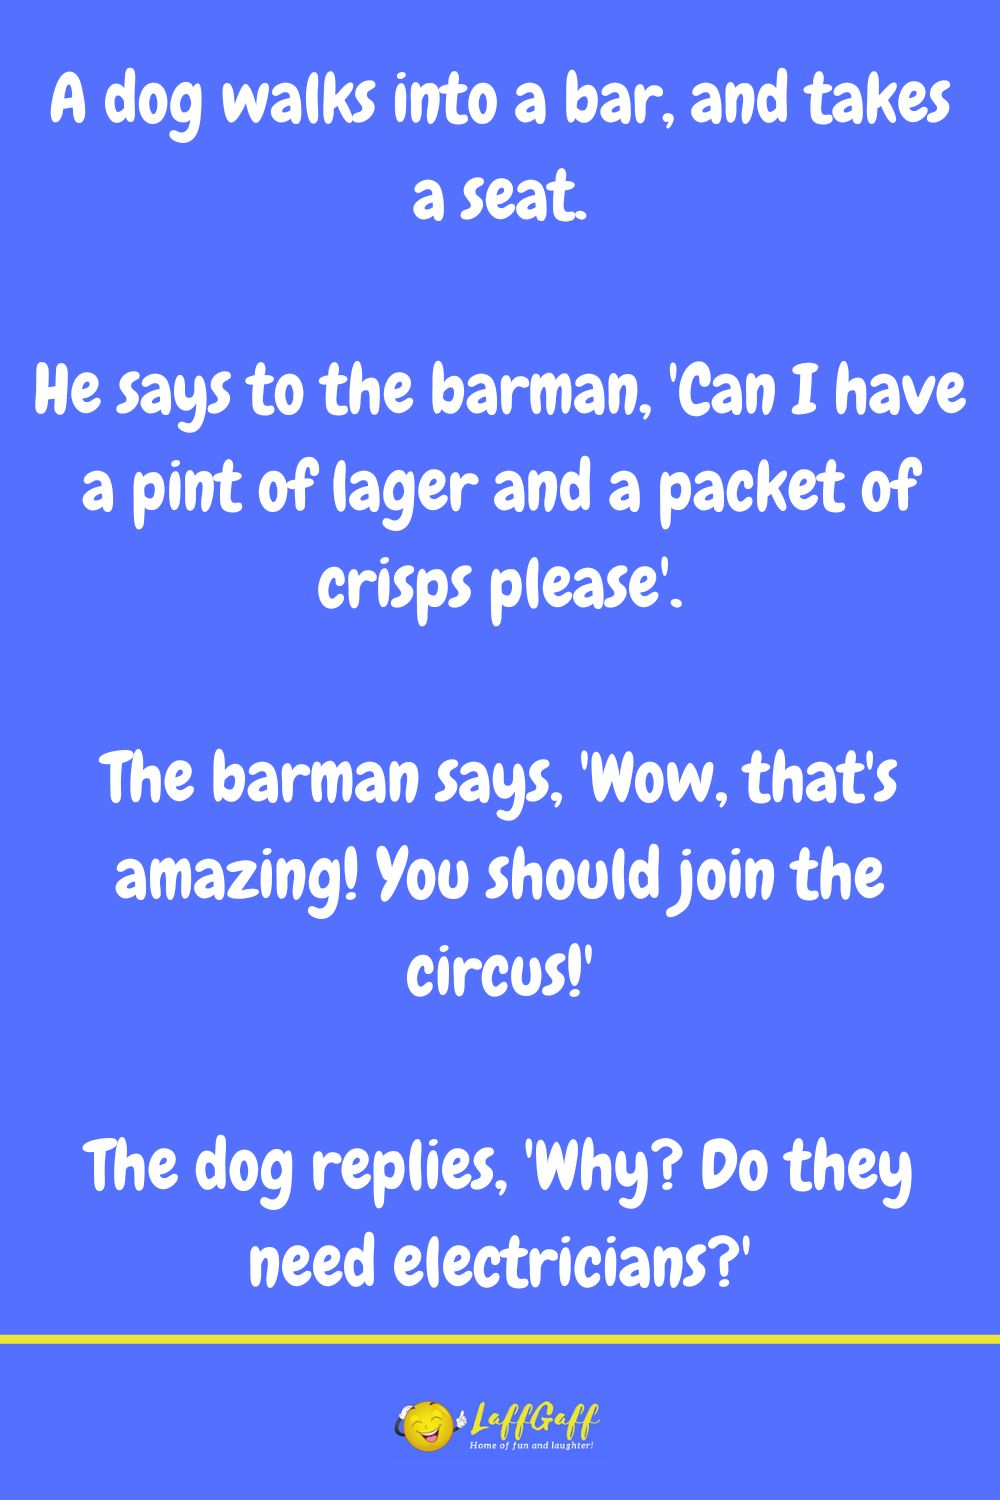 Dog walks into bar joke from LaffGaff.